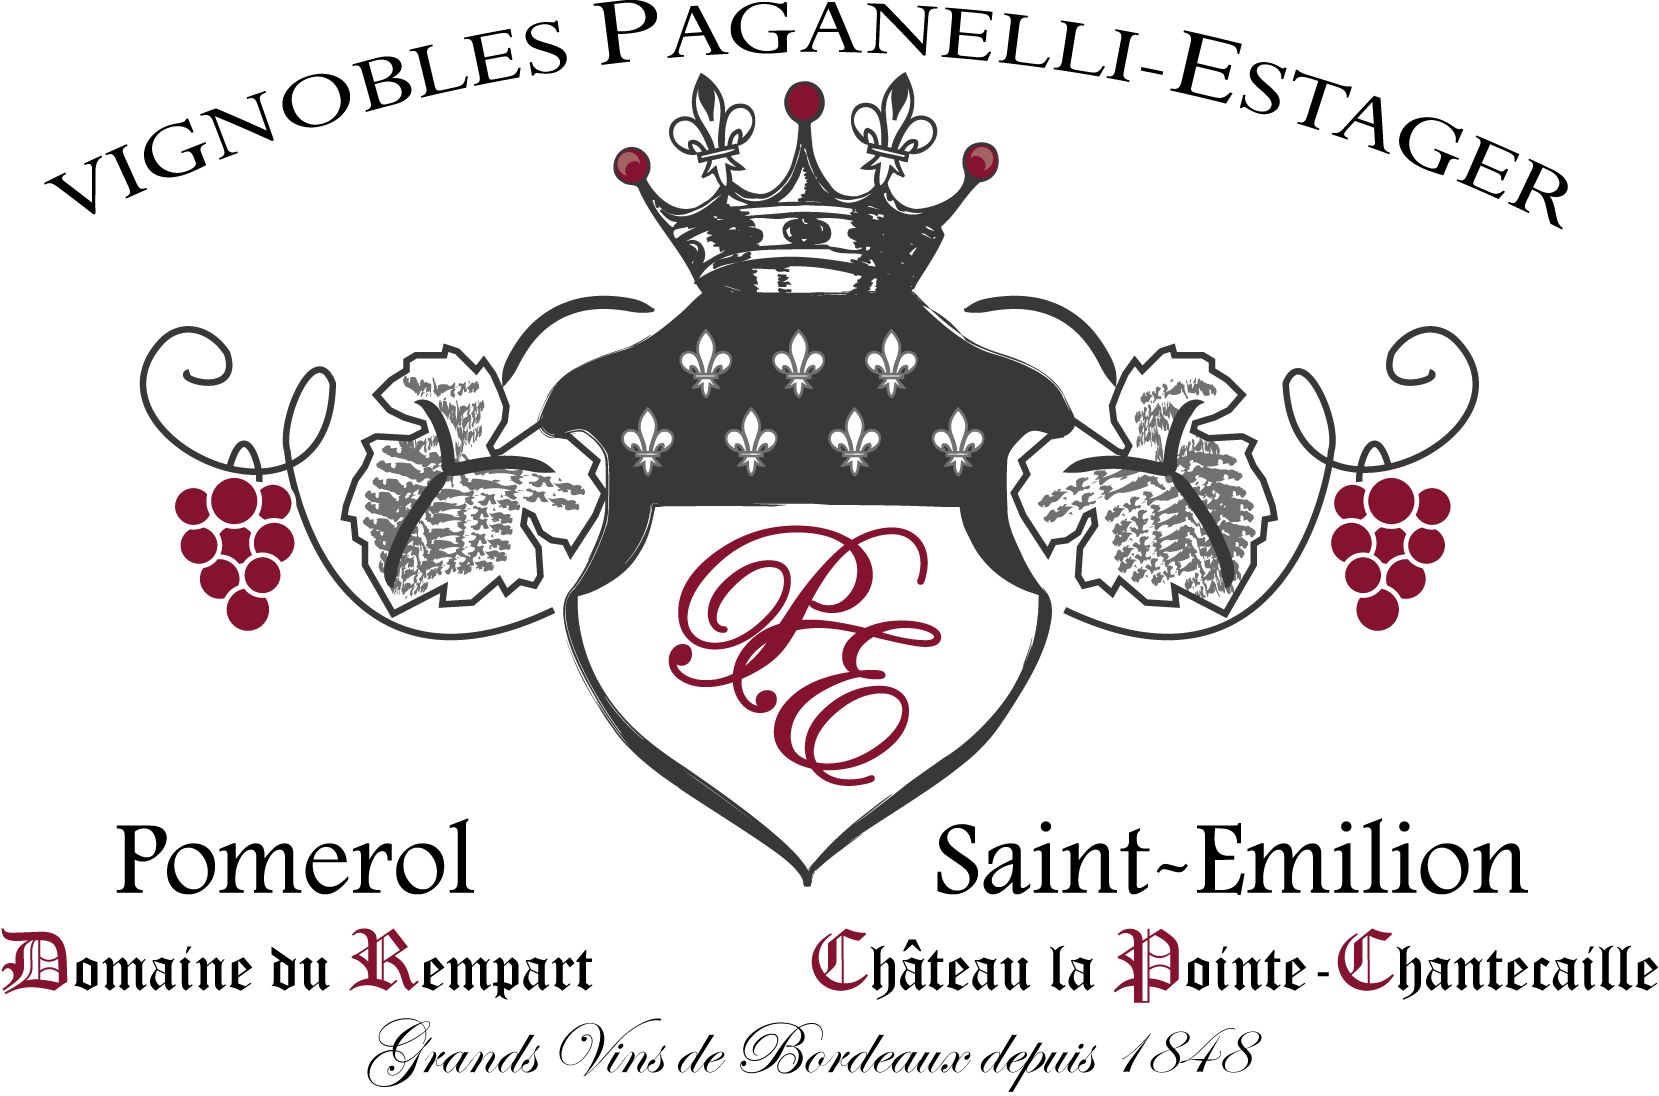 Vignobles Paganelli-Estager